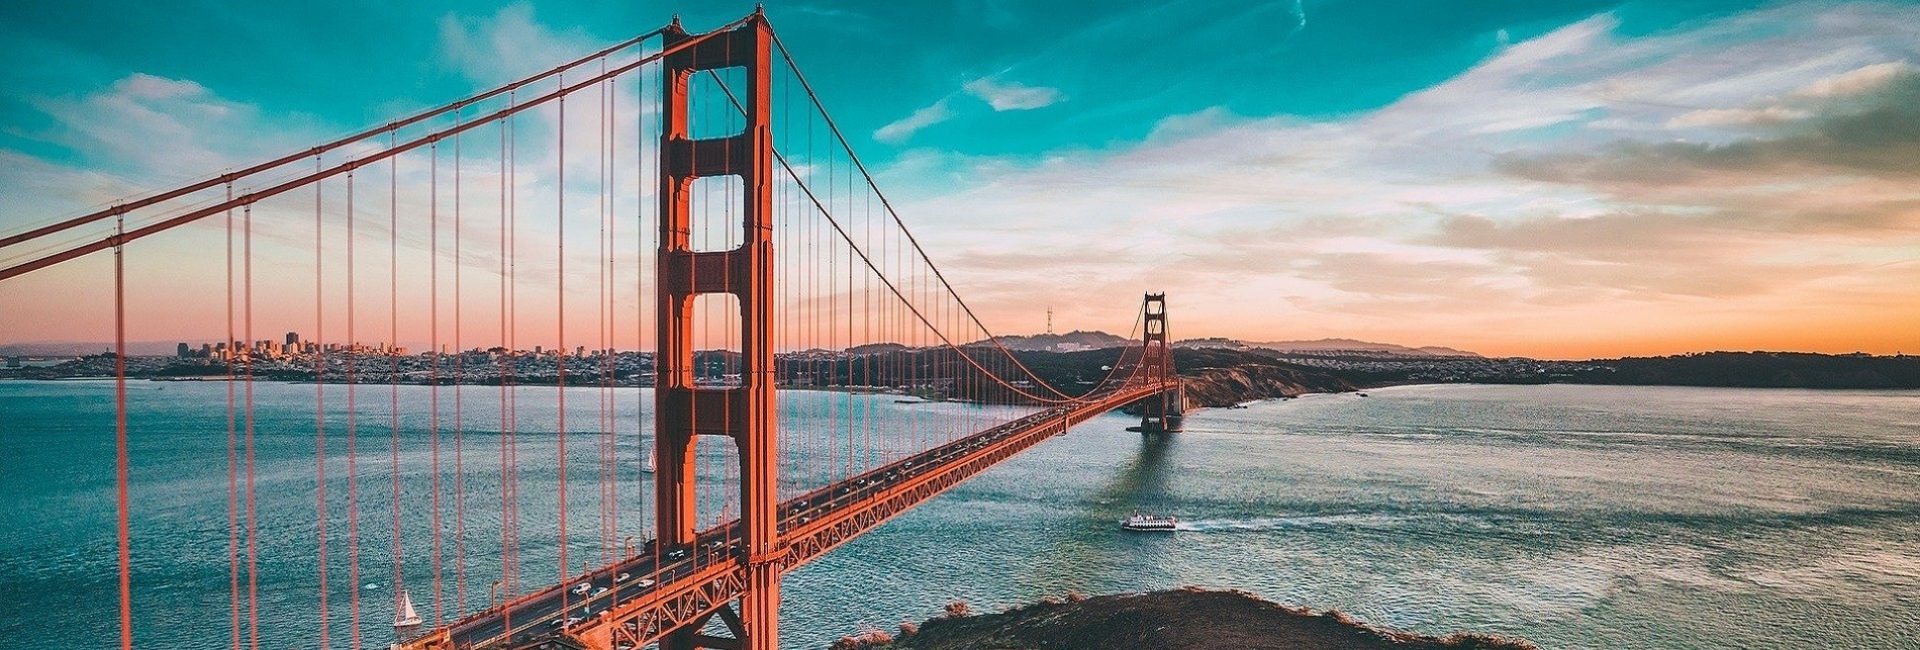 Tečaj engleskog jezika - pogled na San Francisco most